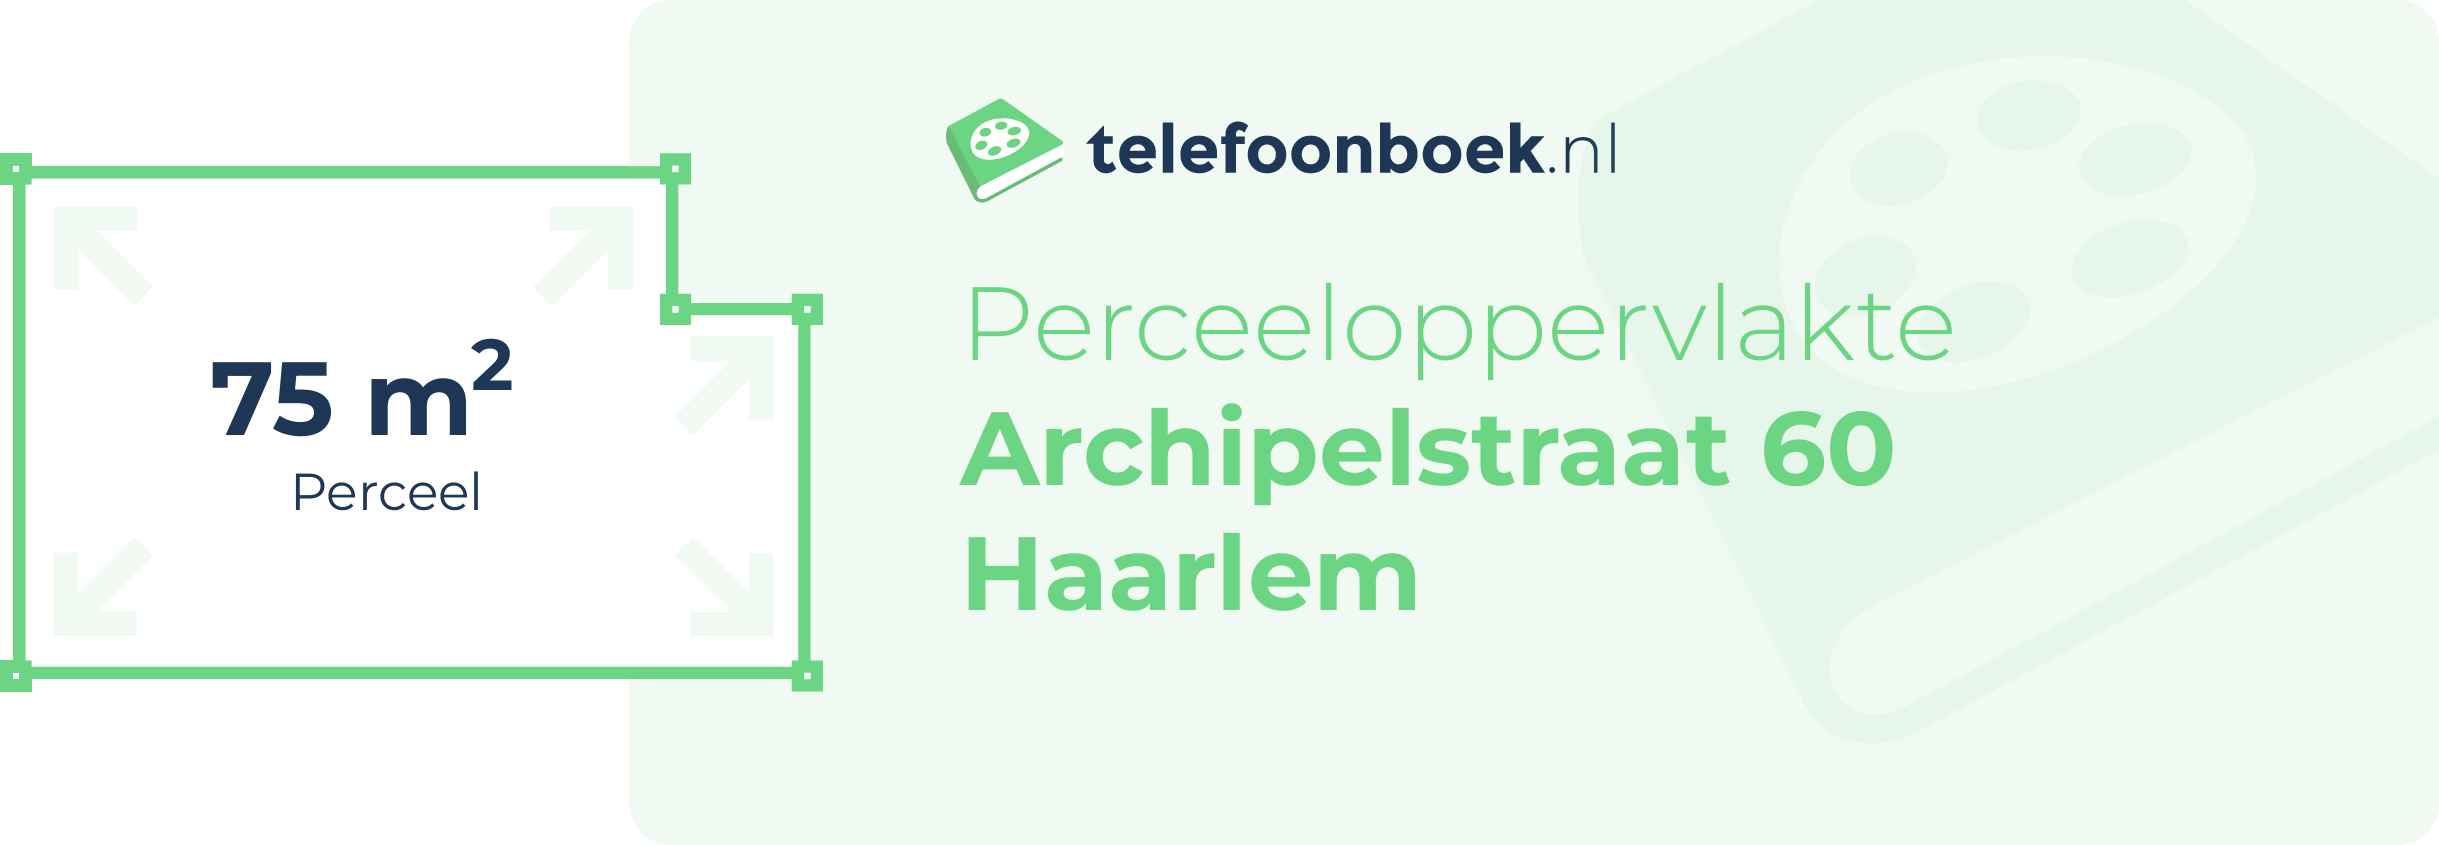 Perceeloppervlakte Archipelstraat 60 Haarlem